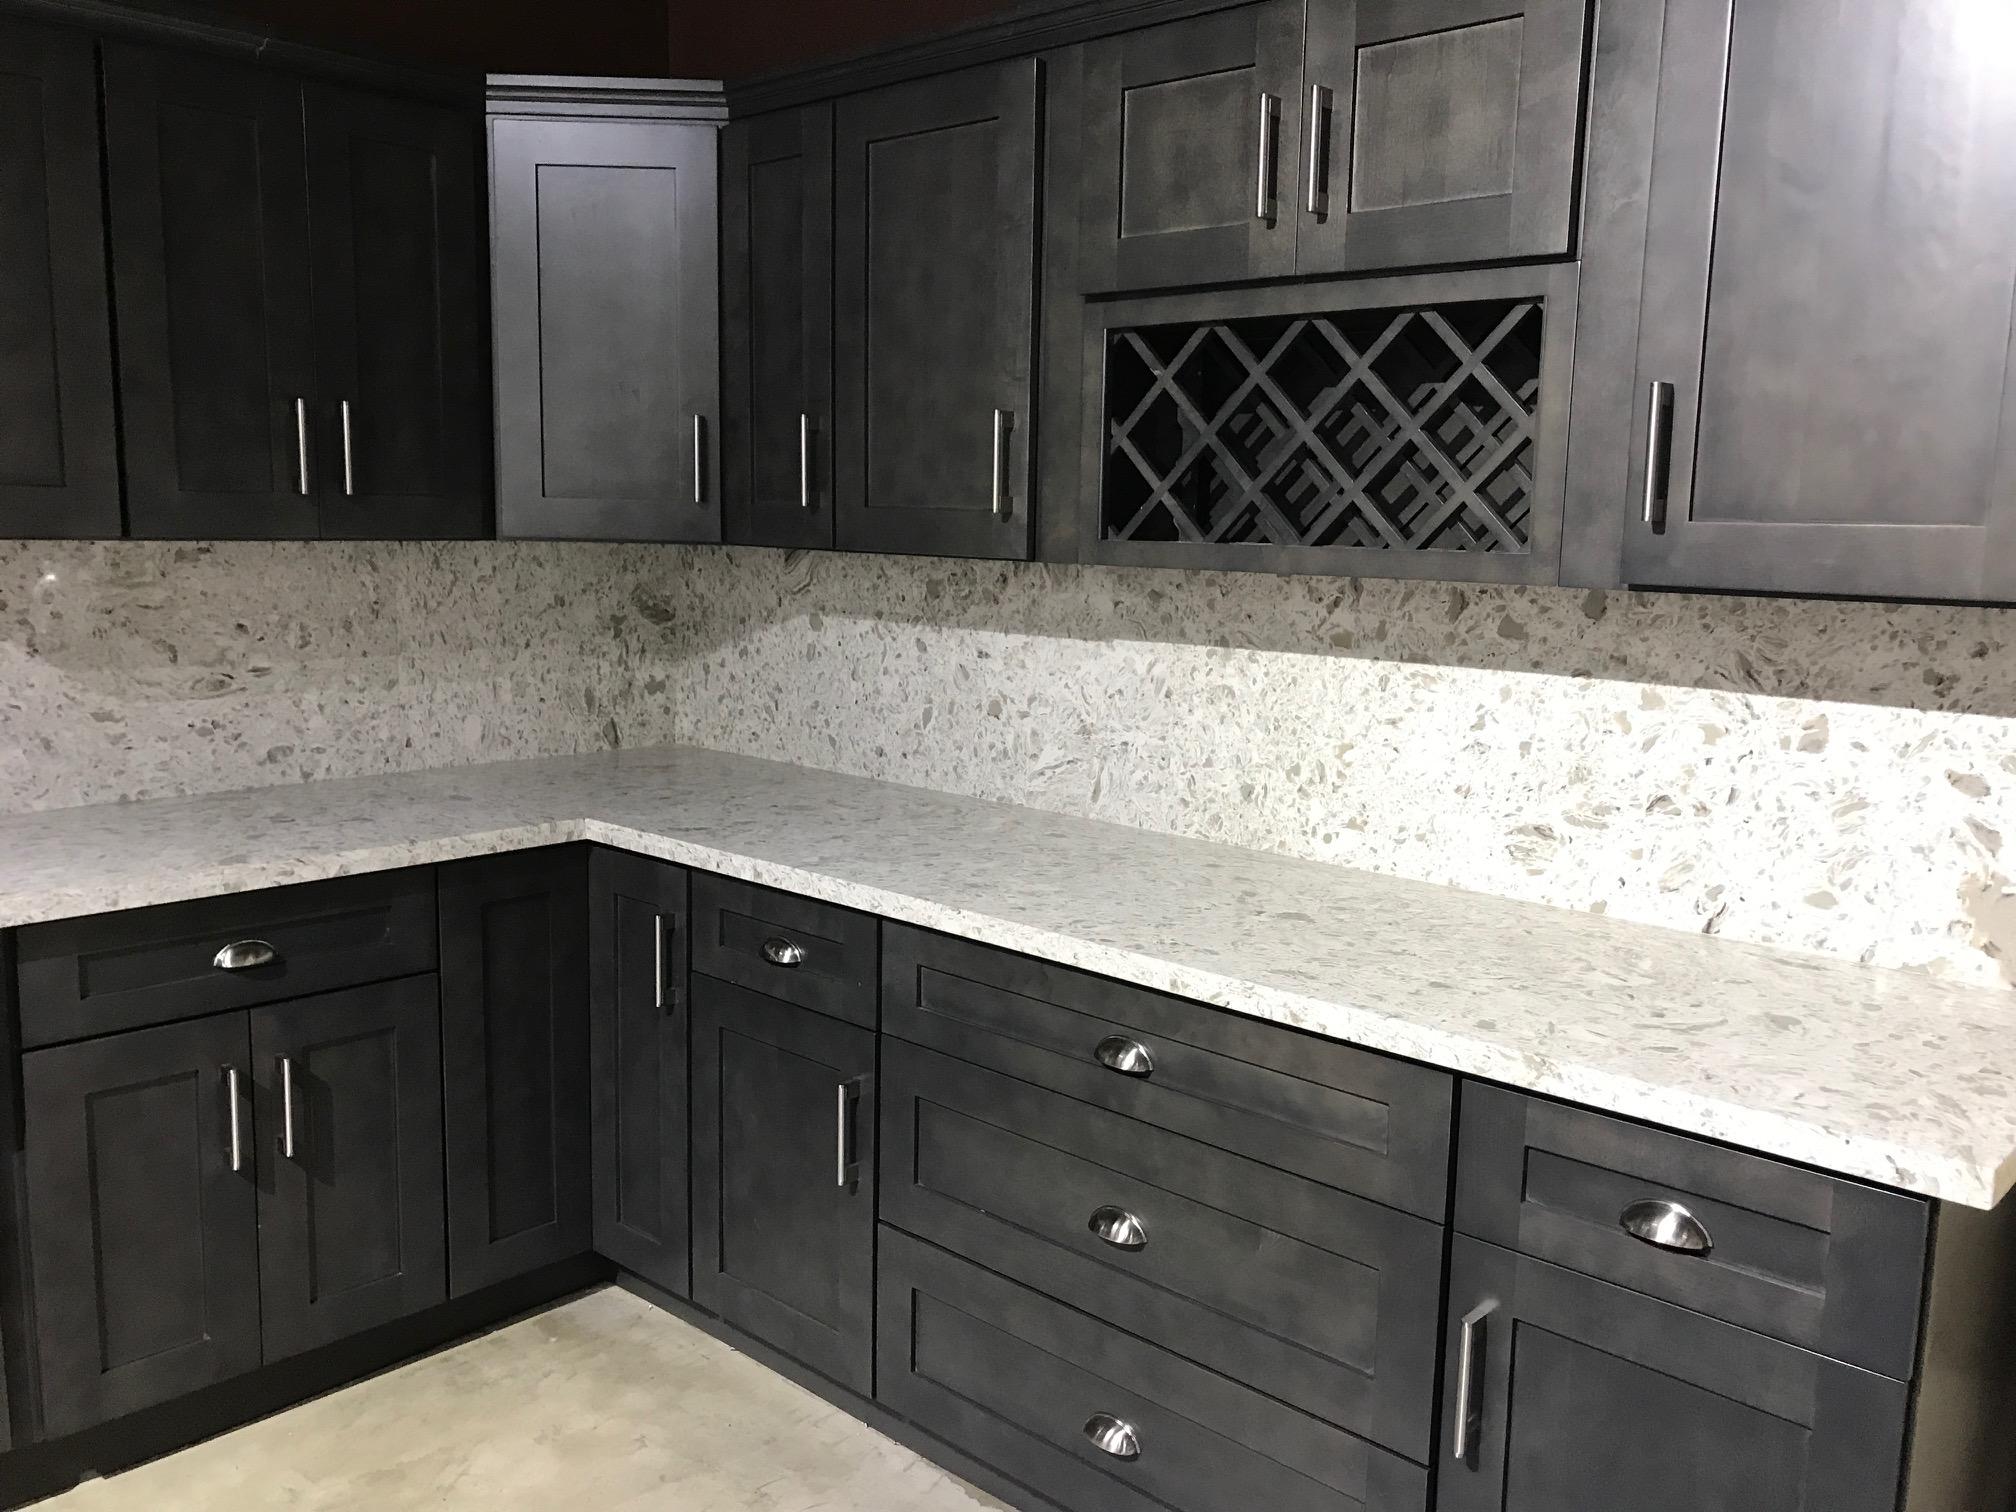 Phantom Grey Kitchen Cabinets
https://www.cabinetdiy.com/grey-kitchen-cabinets